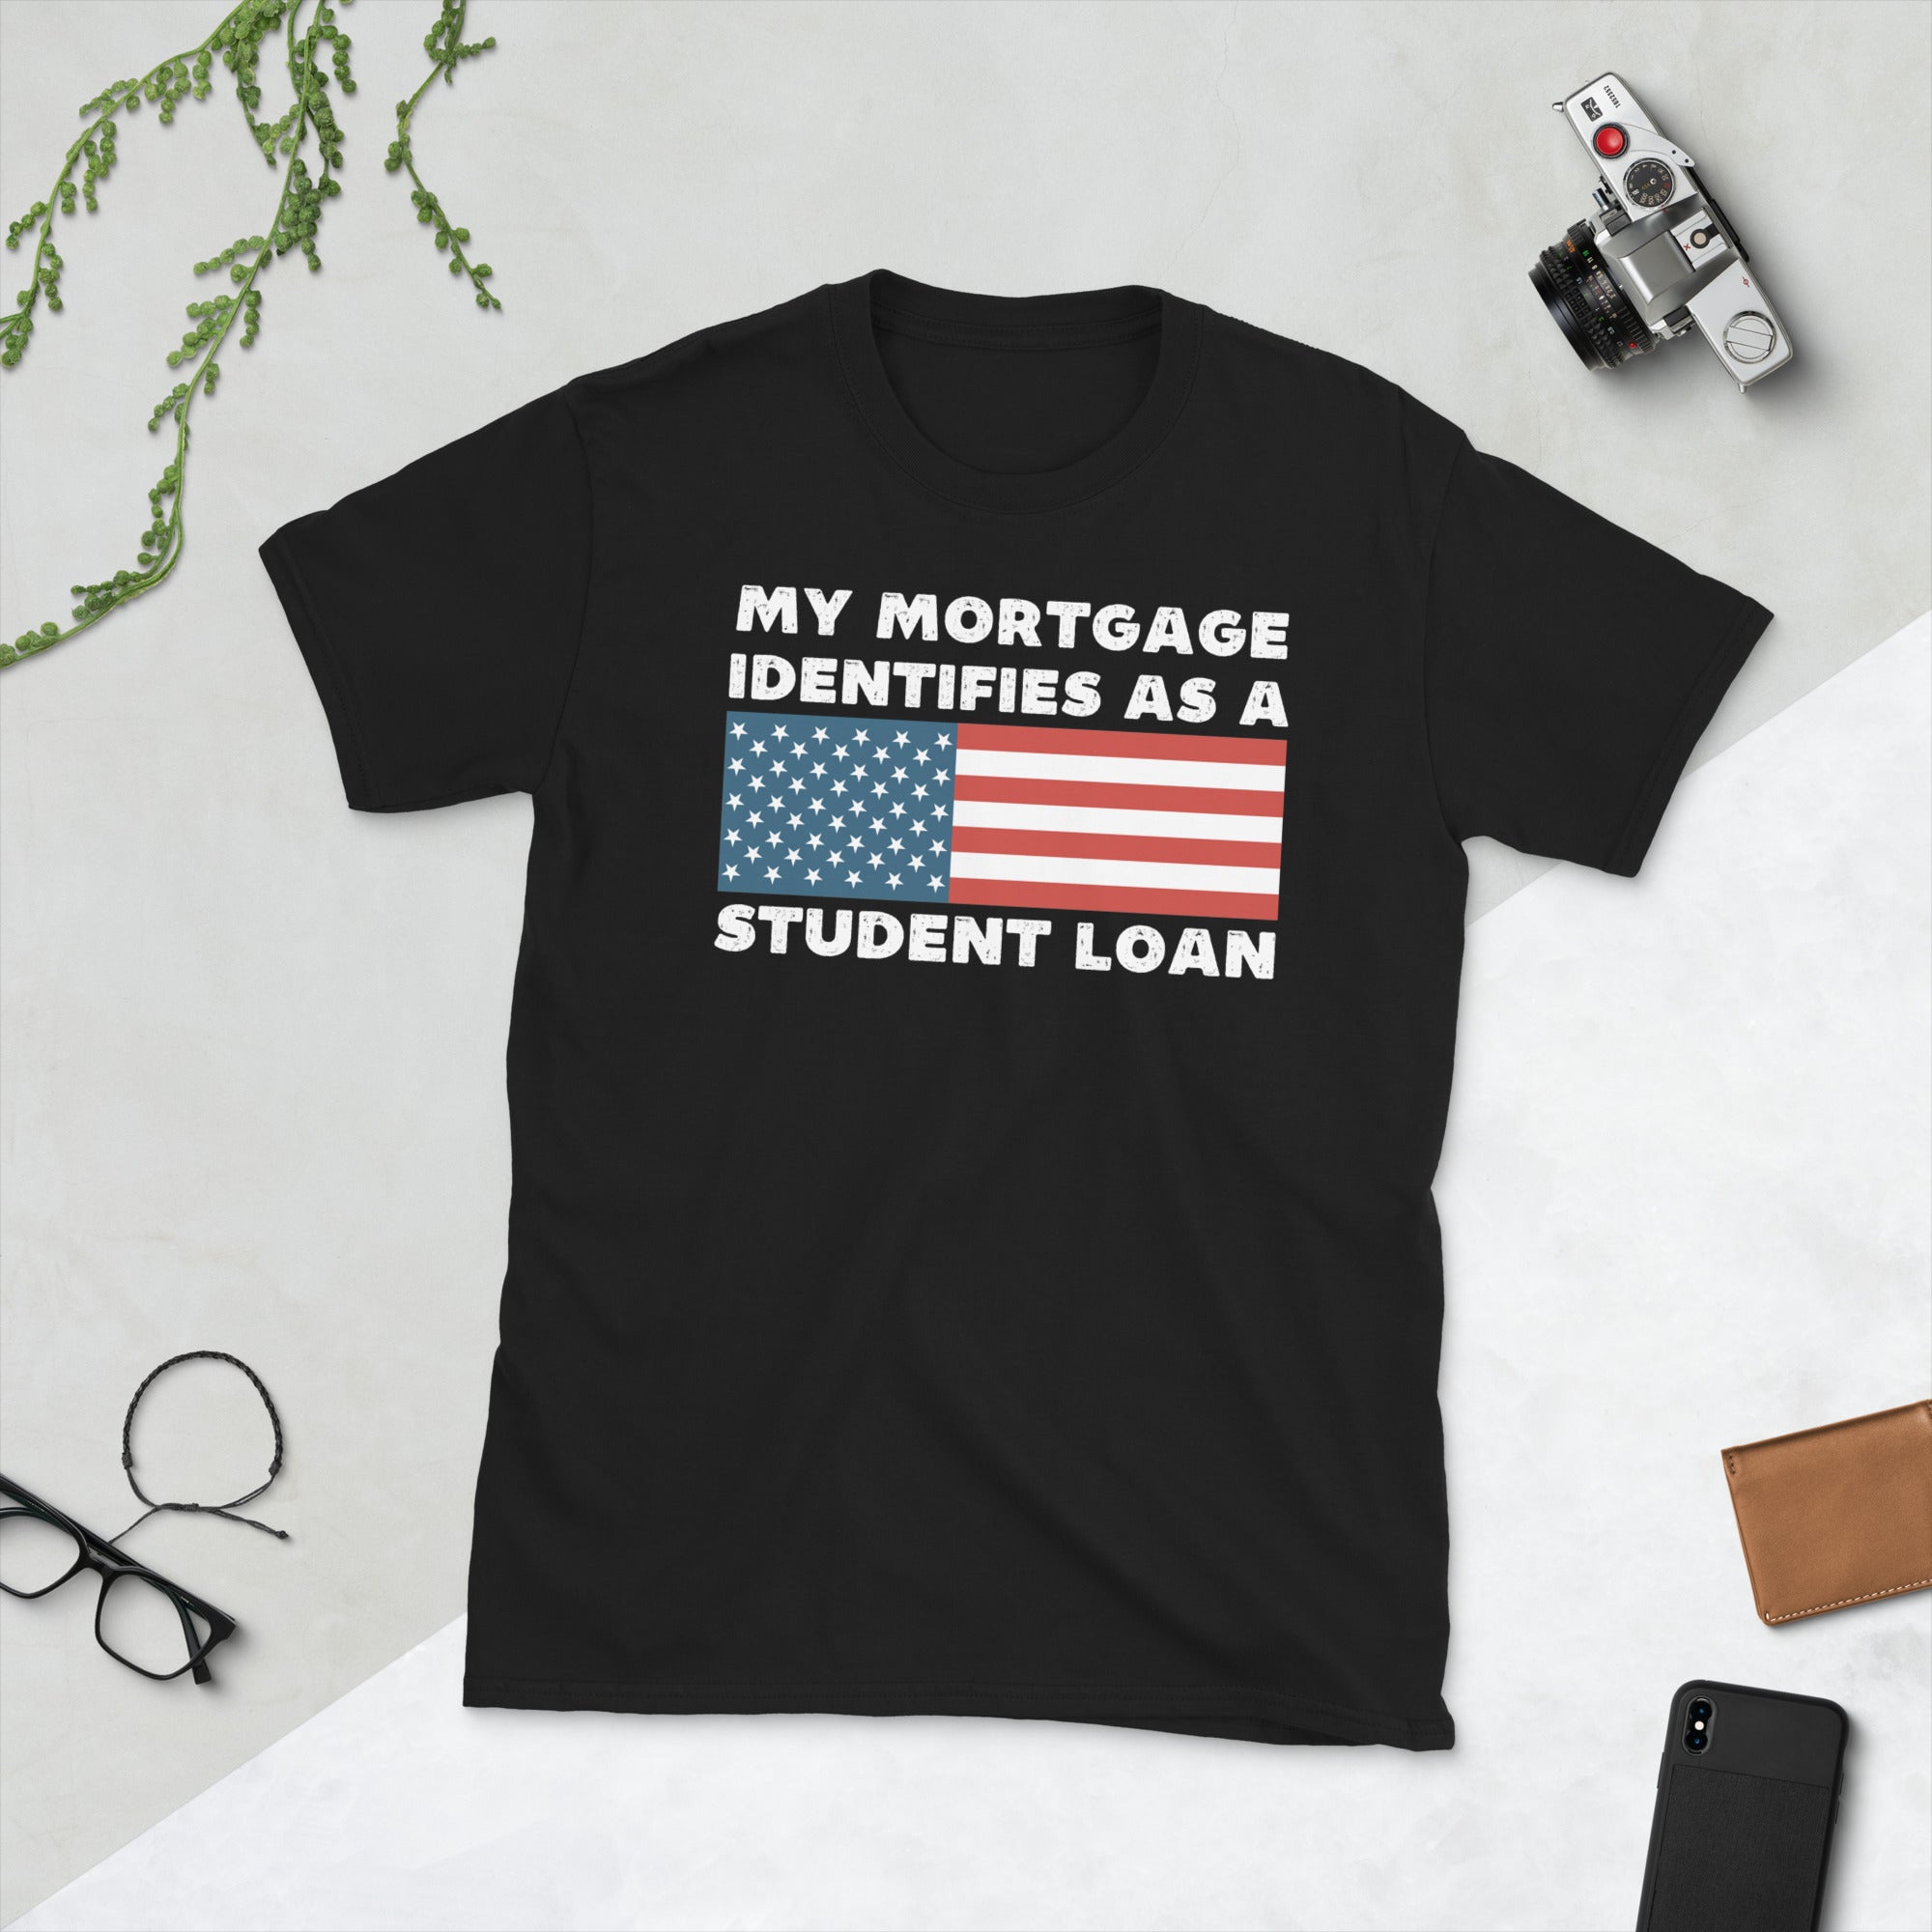 My Mortgage Identifies As A Student Loan Funny Shirt, Cancel Student Debt, American Flag Retro Shirt, FJB Shirt, College Students Debt Tee